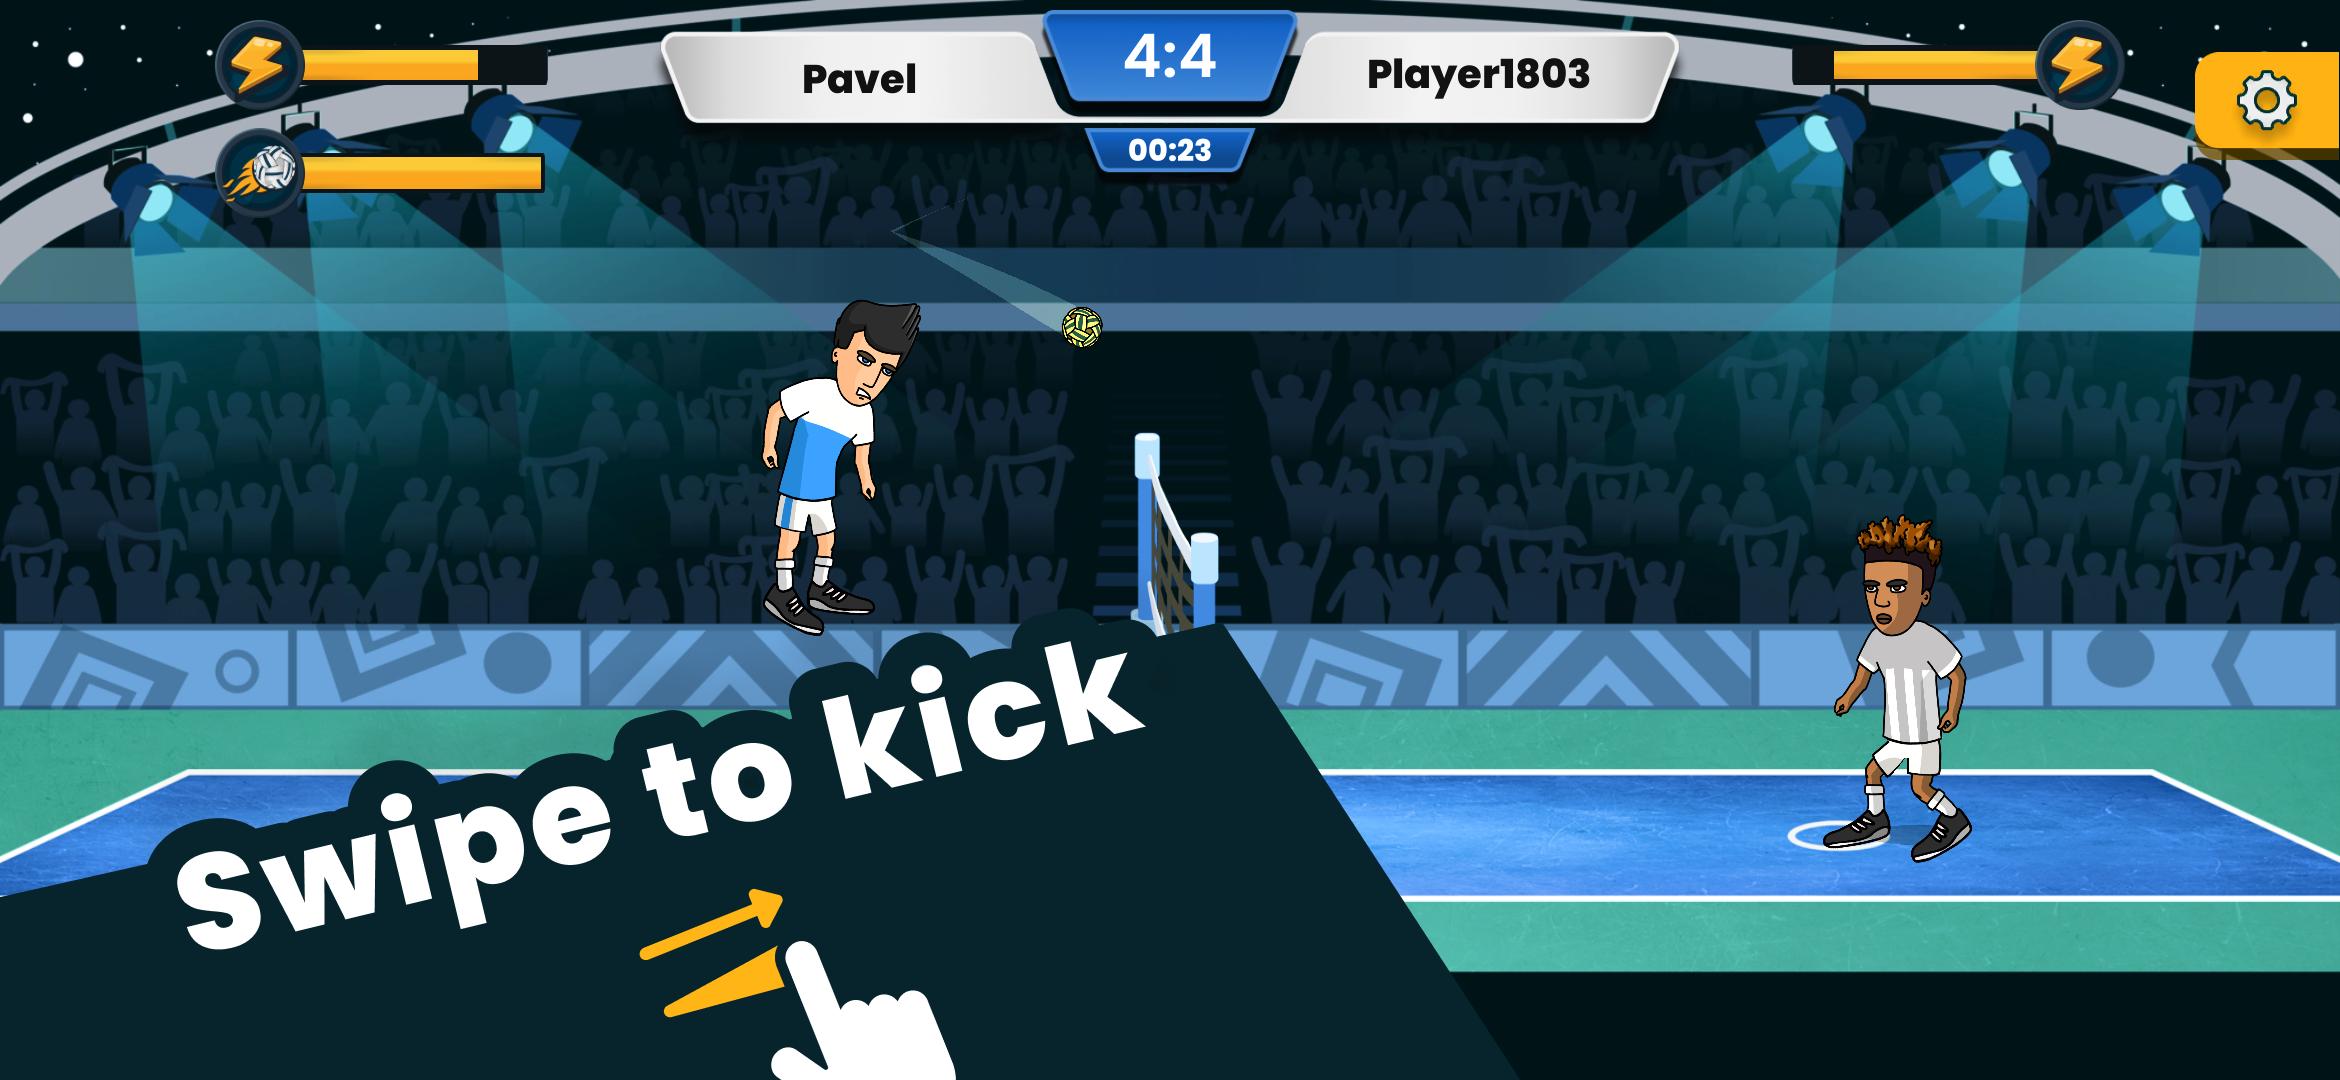 Sepak soccer: street challenge sports game 0.41.3 Screenshot 5